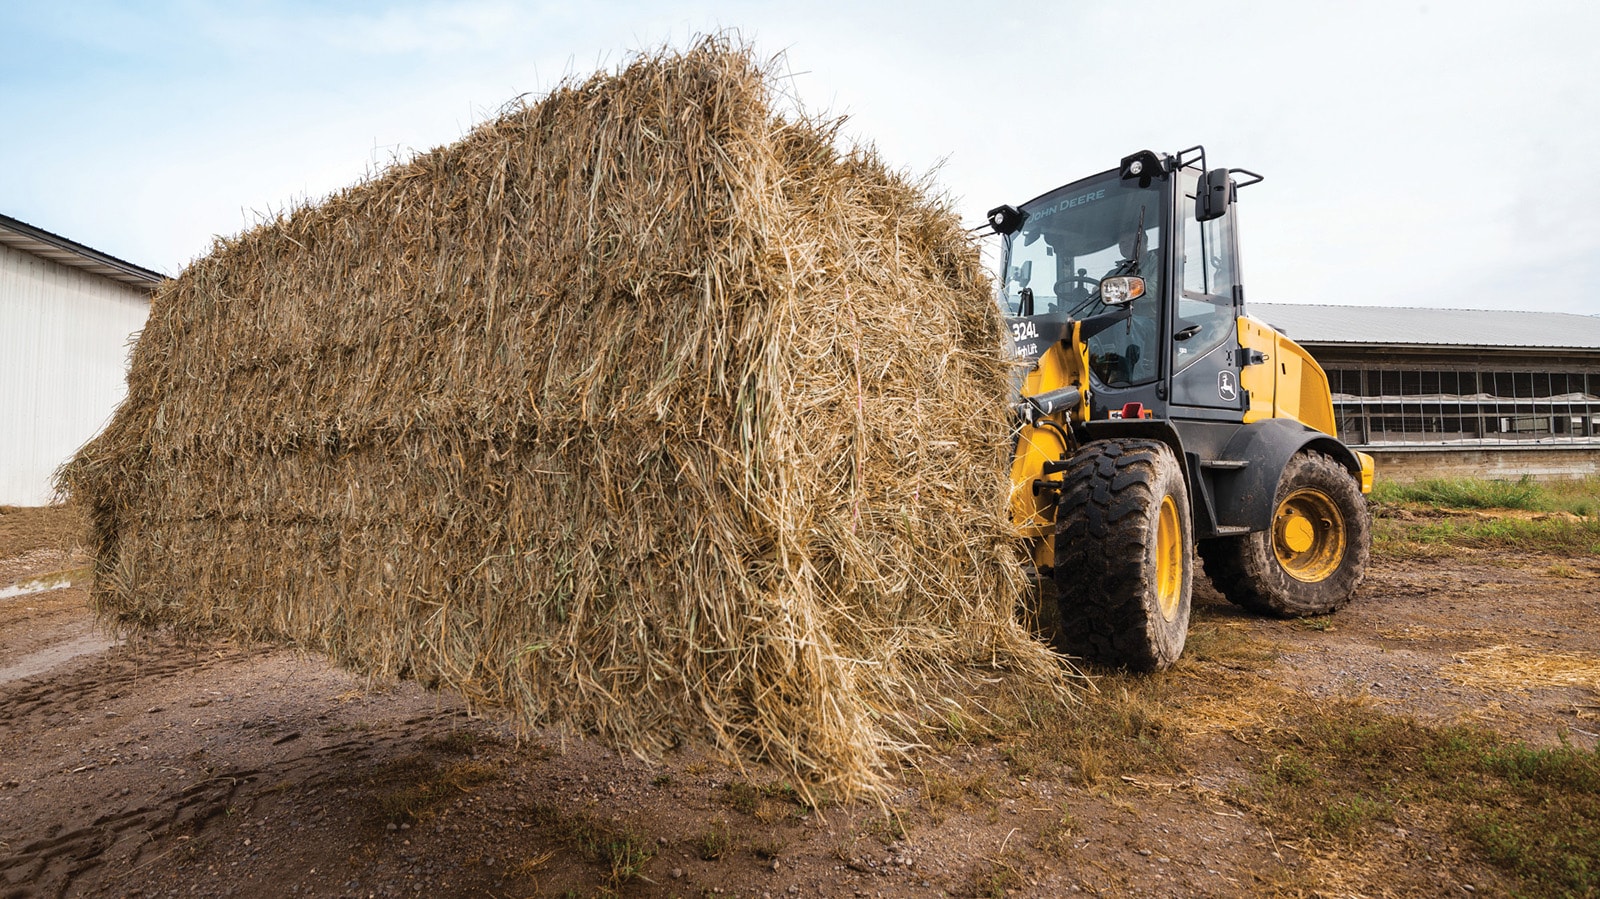 324L High-Lift Compact Wheel Loader hauls a bale of hay through the barnyard.